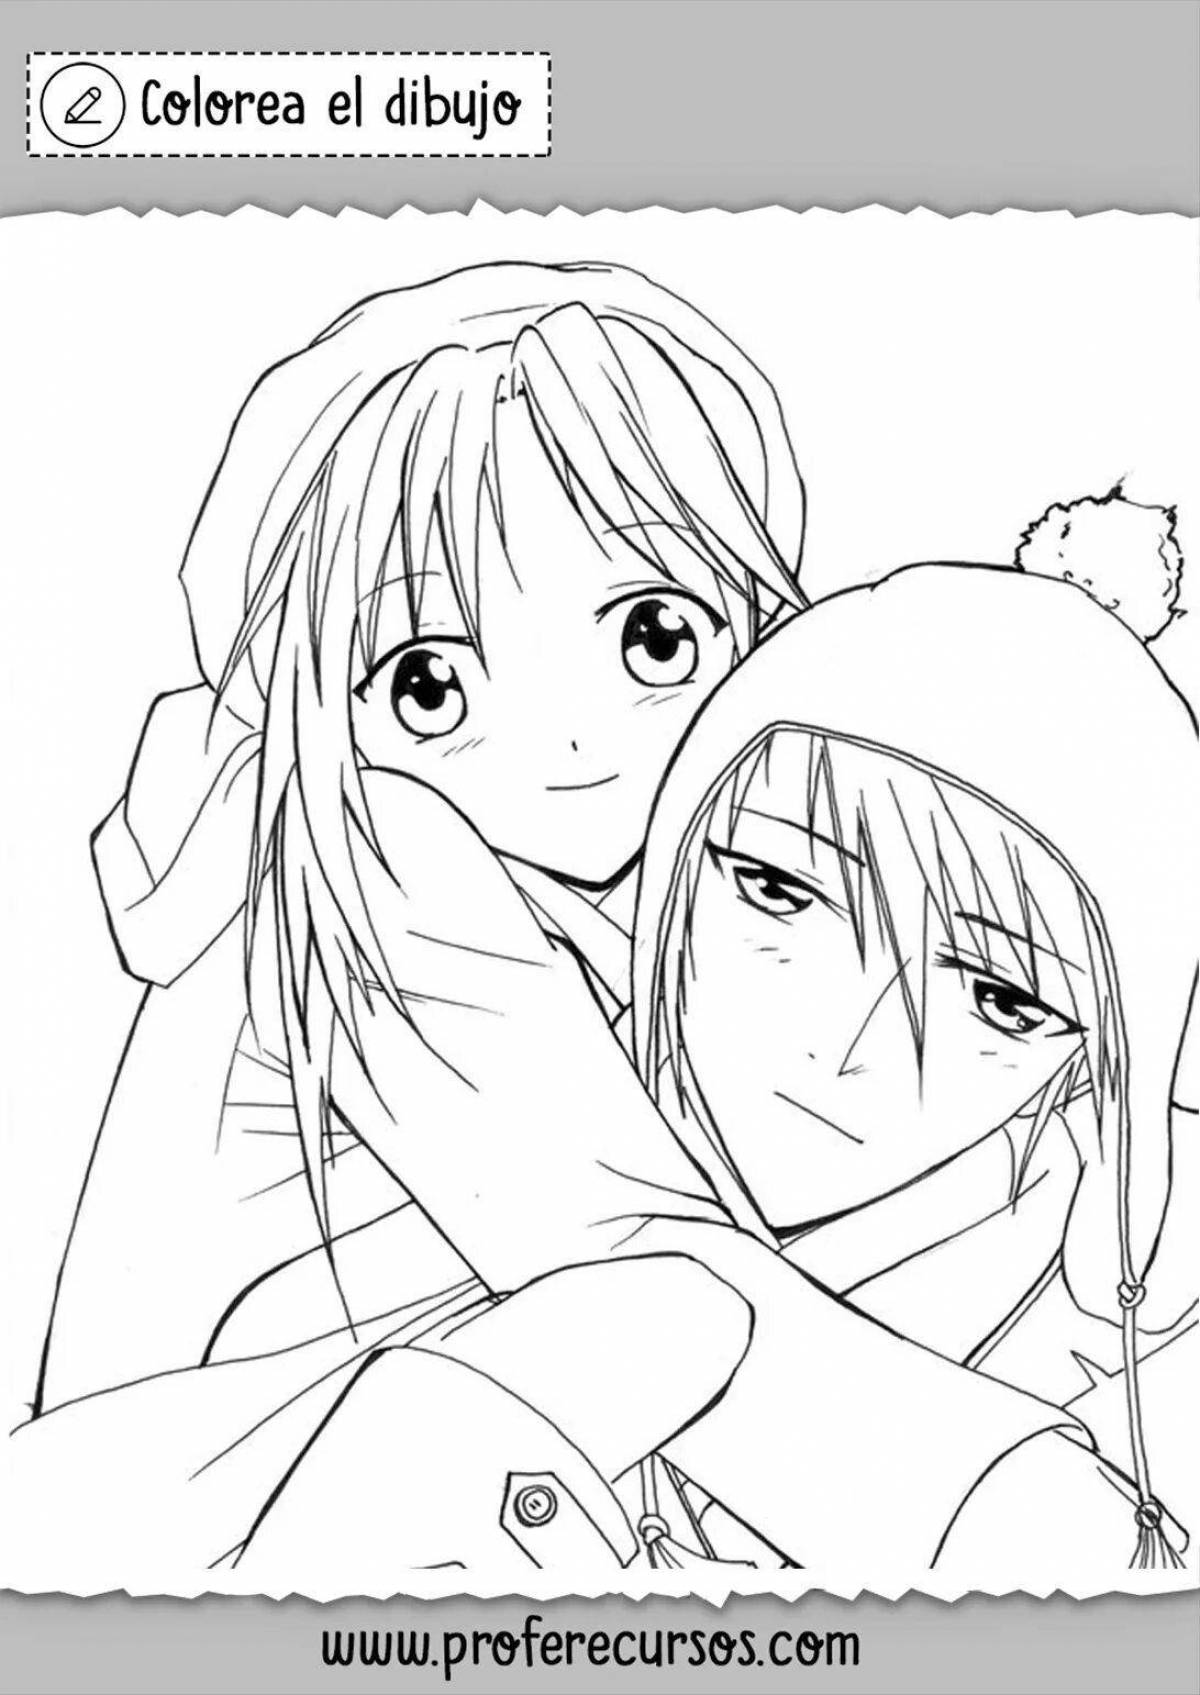 Fun anime boy and girl coloring book